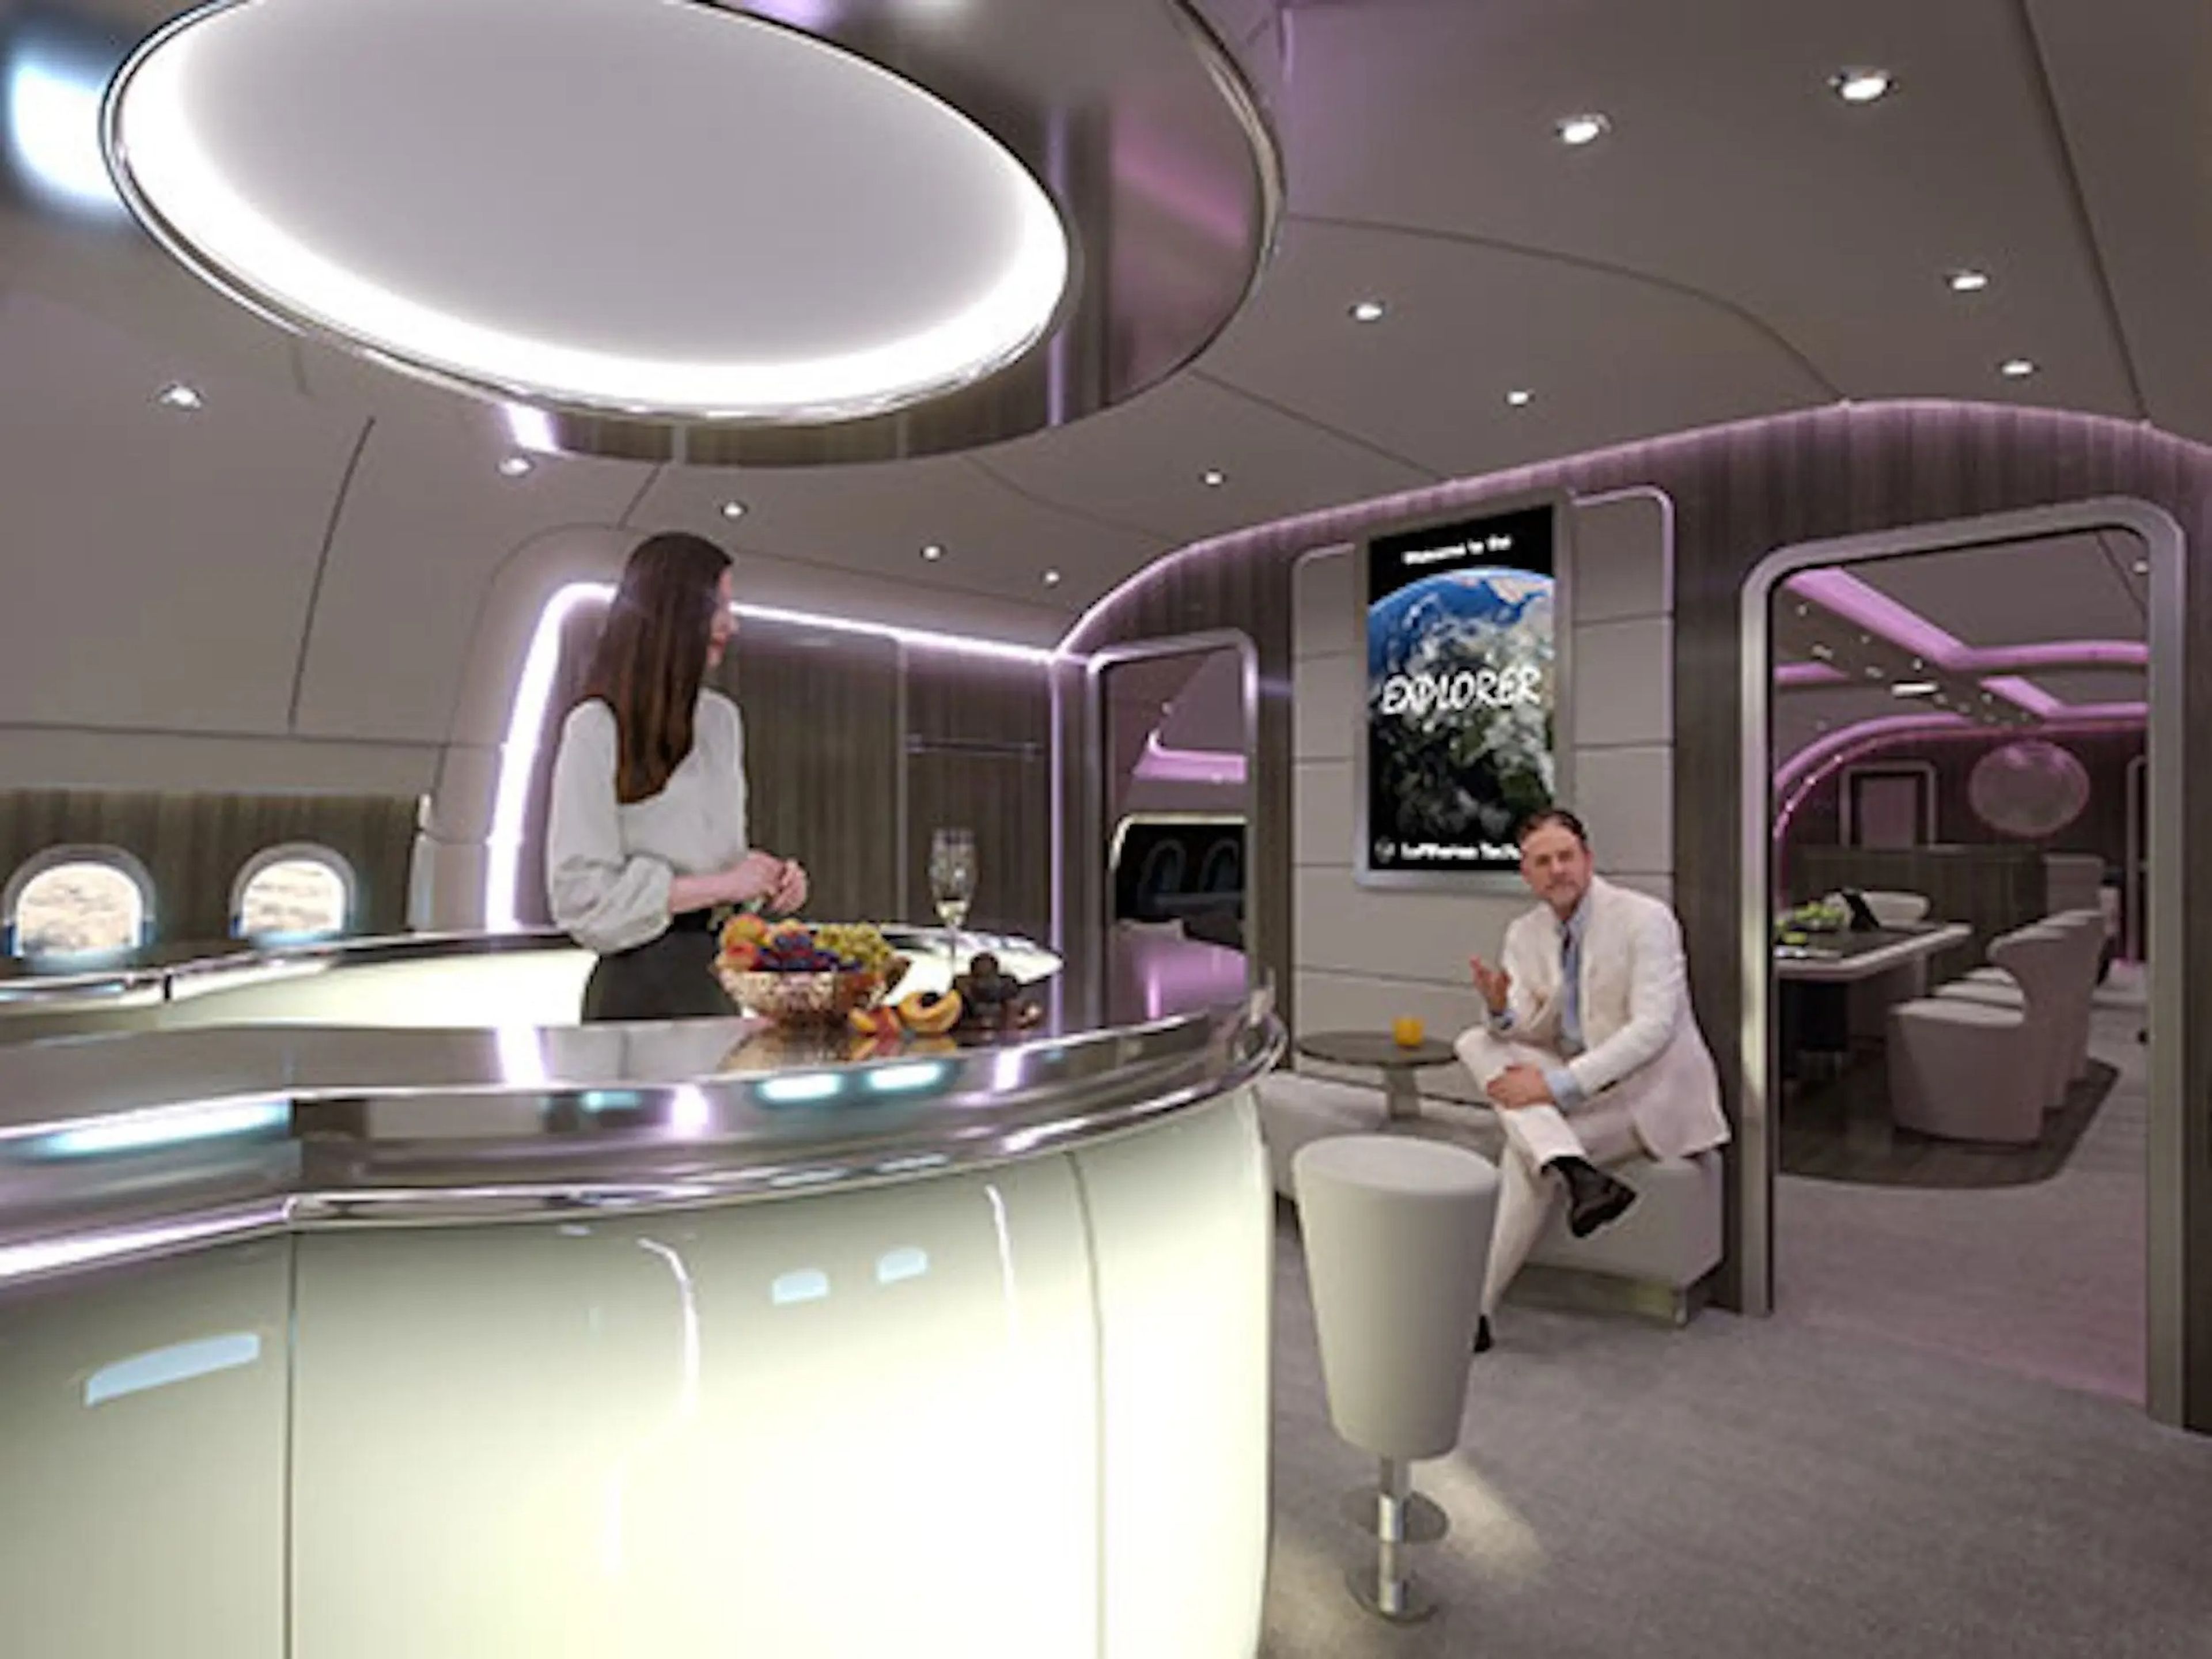 Lufthansa Technik A330 VIP cabin concept.